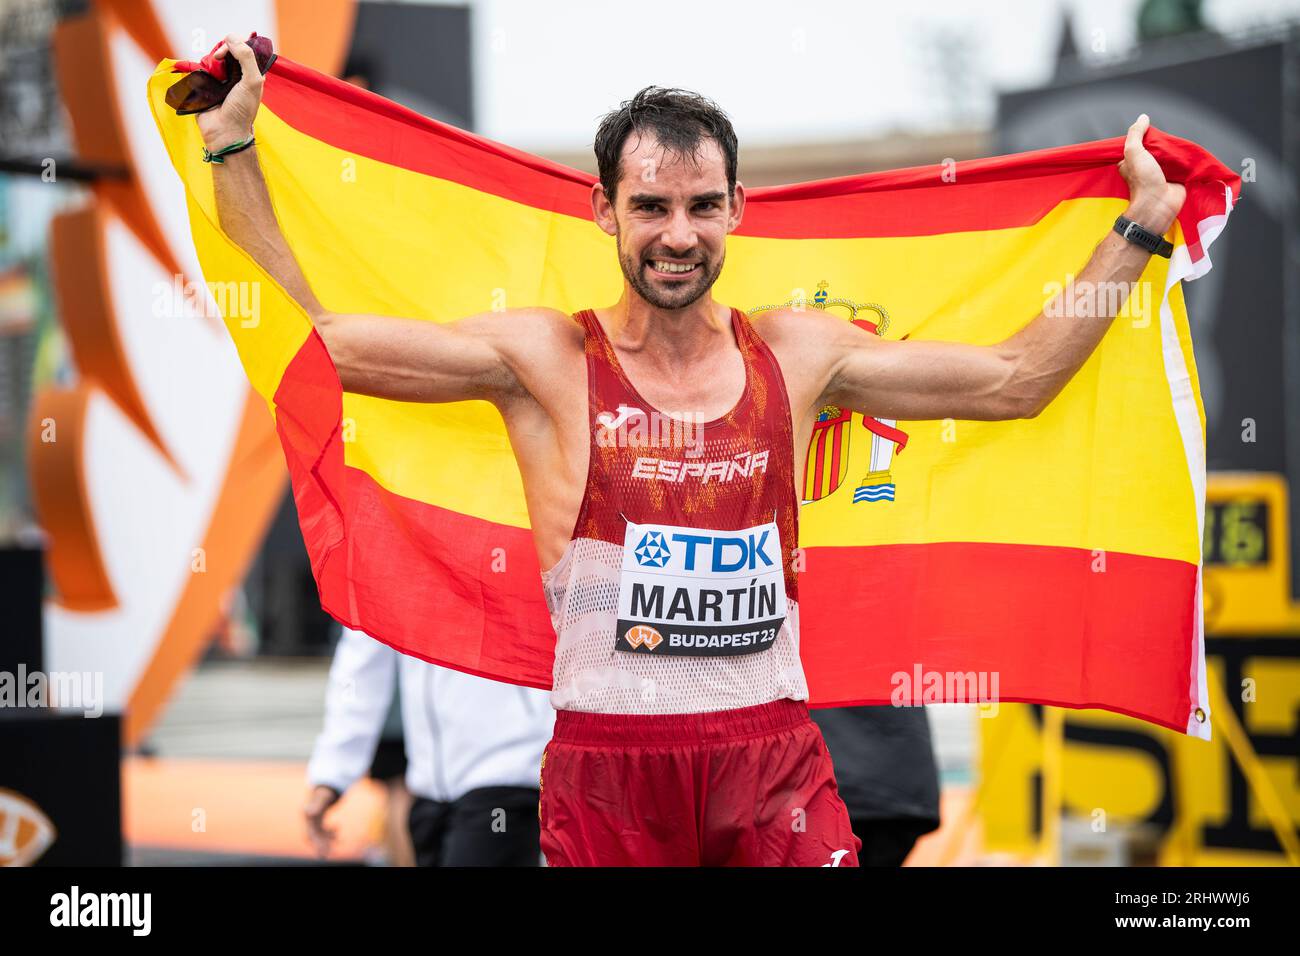 World Athletics Championships: Spanish race walker Martin wins first gold, Sports News